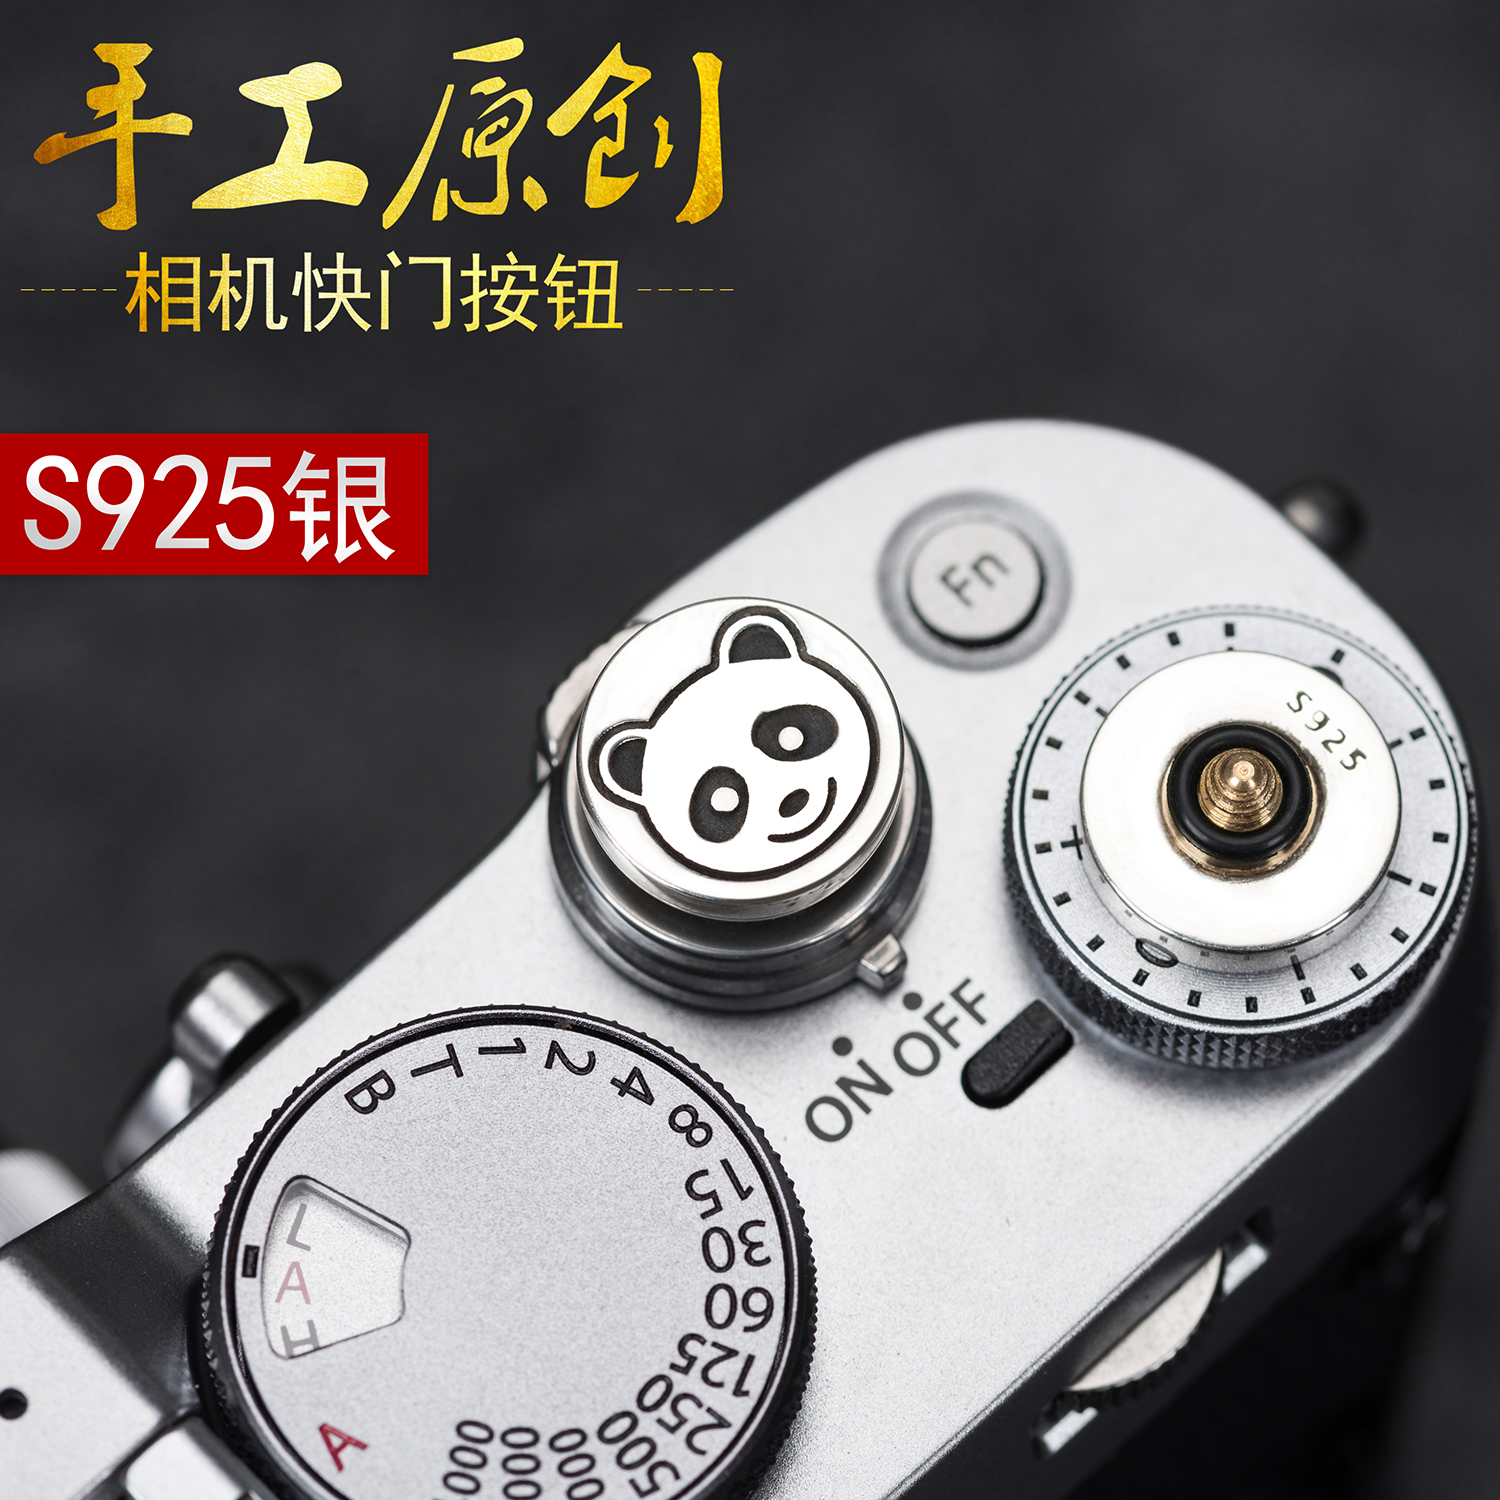 Fuji XT20 304 M10/MP/M240/R Rollei 35 Panda Edition용 카메라 셔터 버튼 실버